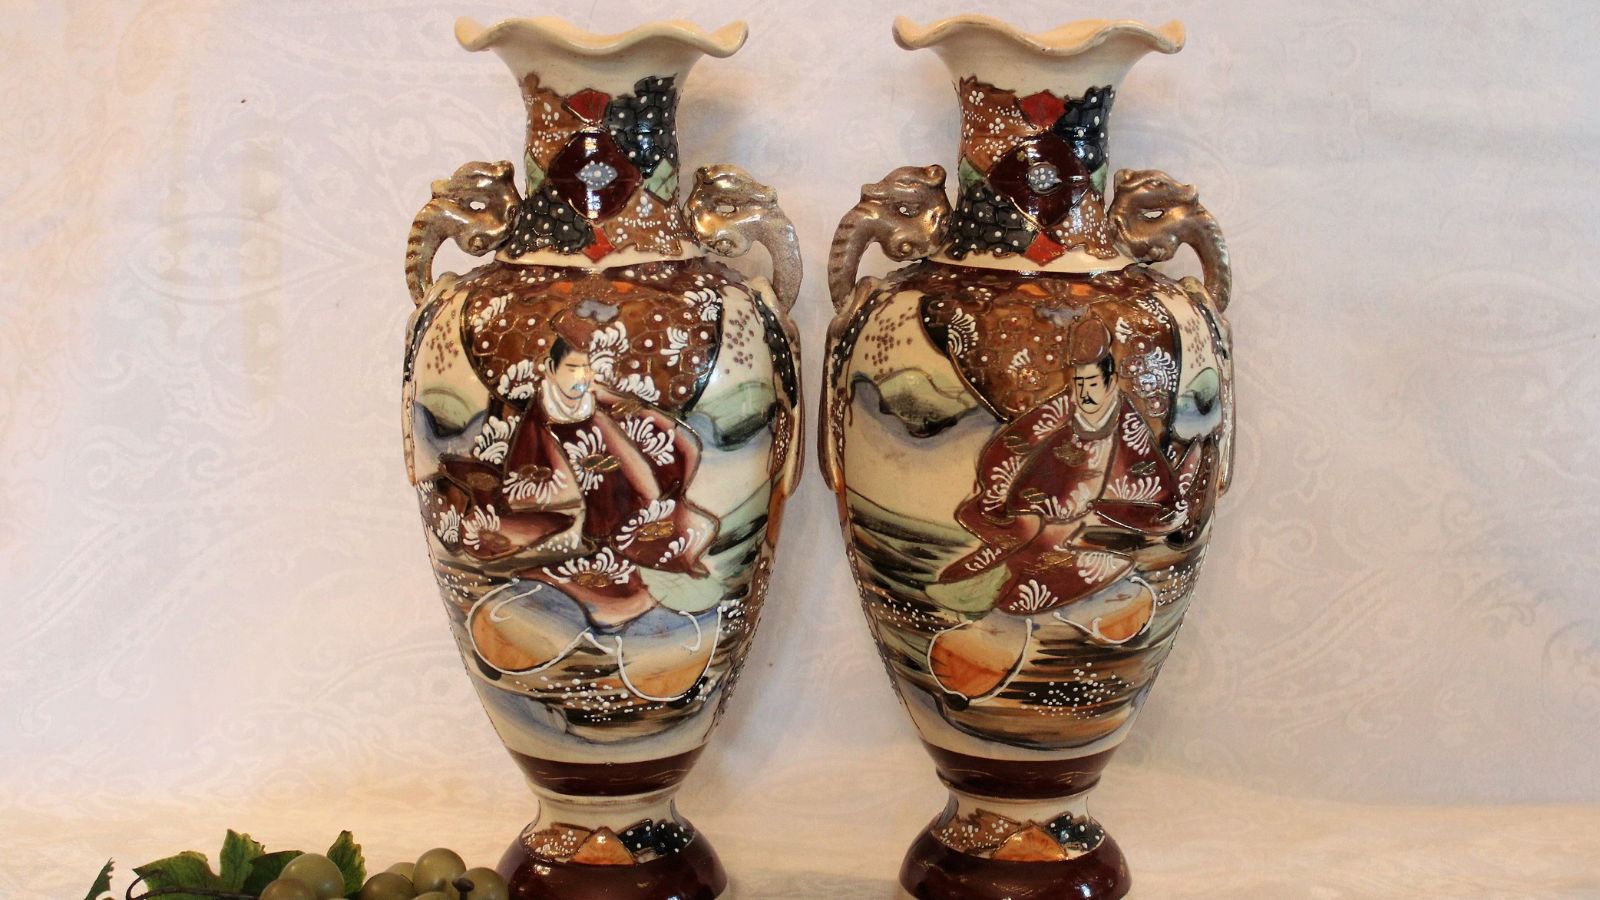 How to Identify Antique Japanese Vase